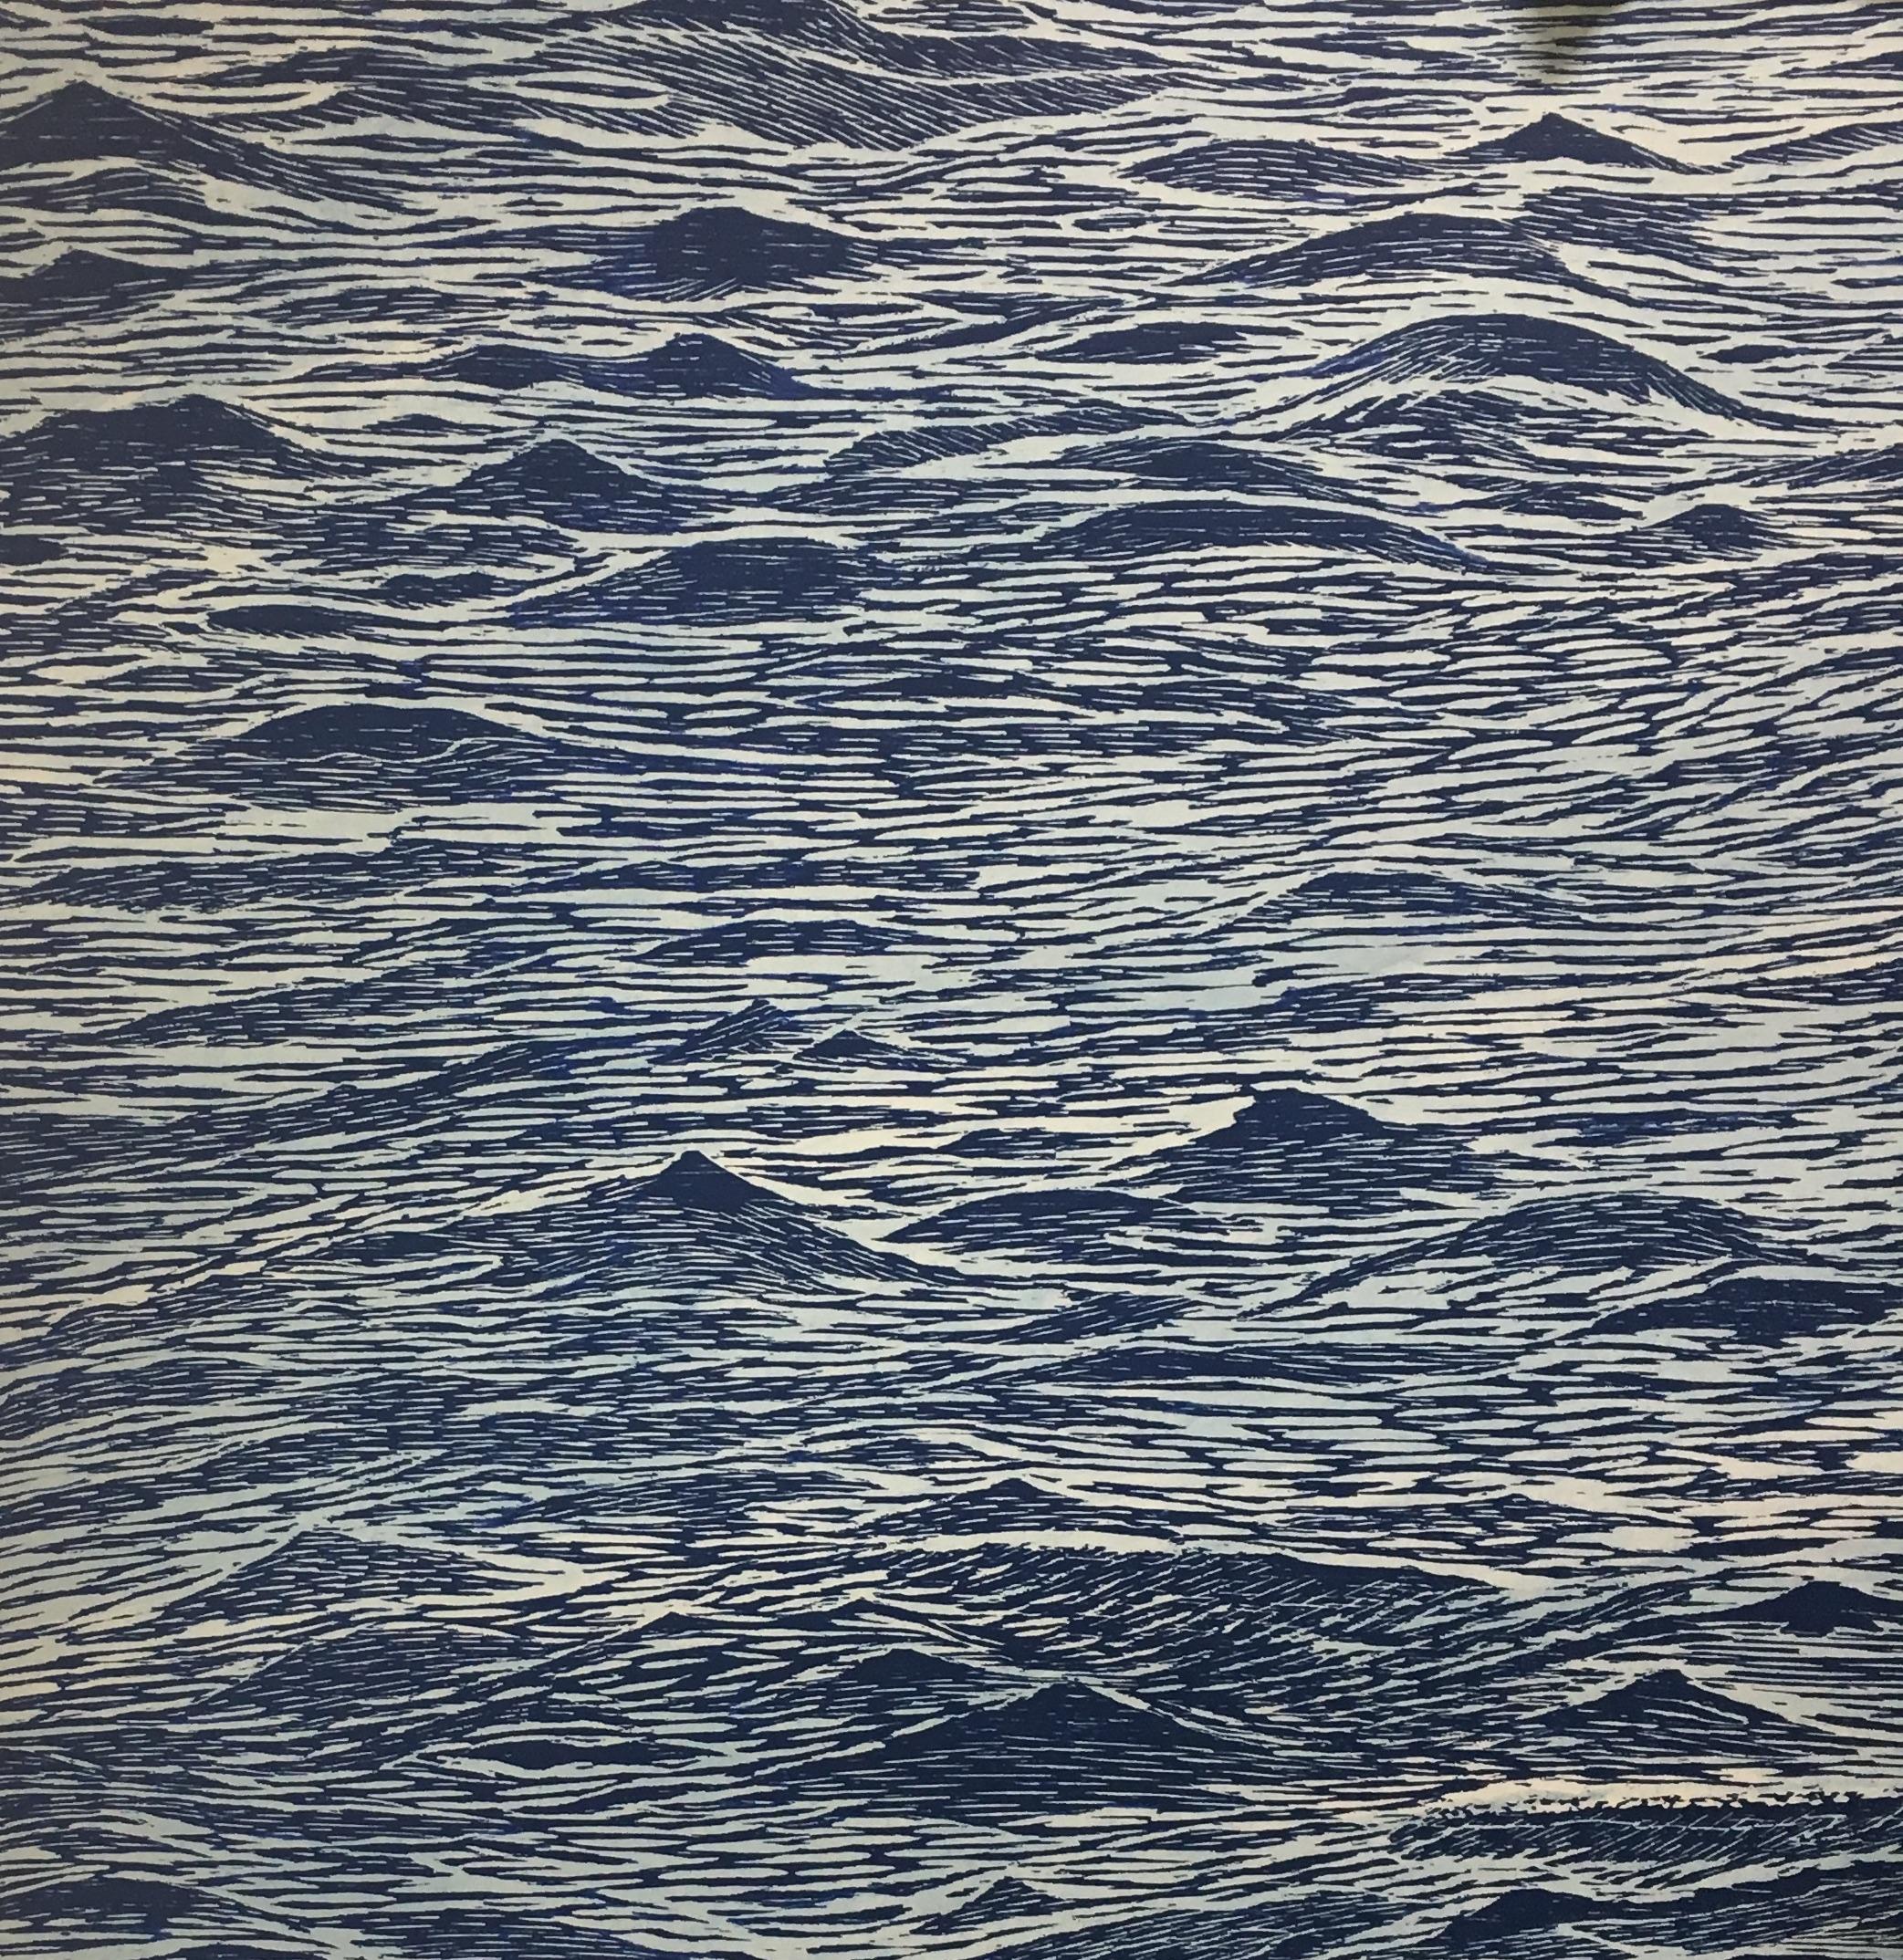 Seascape 24, Woodcut Print of Ocean Waves in Light Blue and Dark Cobalt, Navy 5